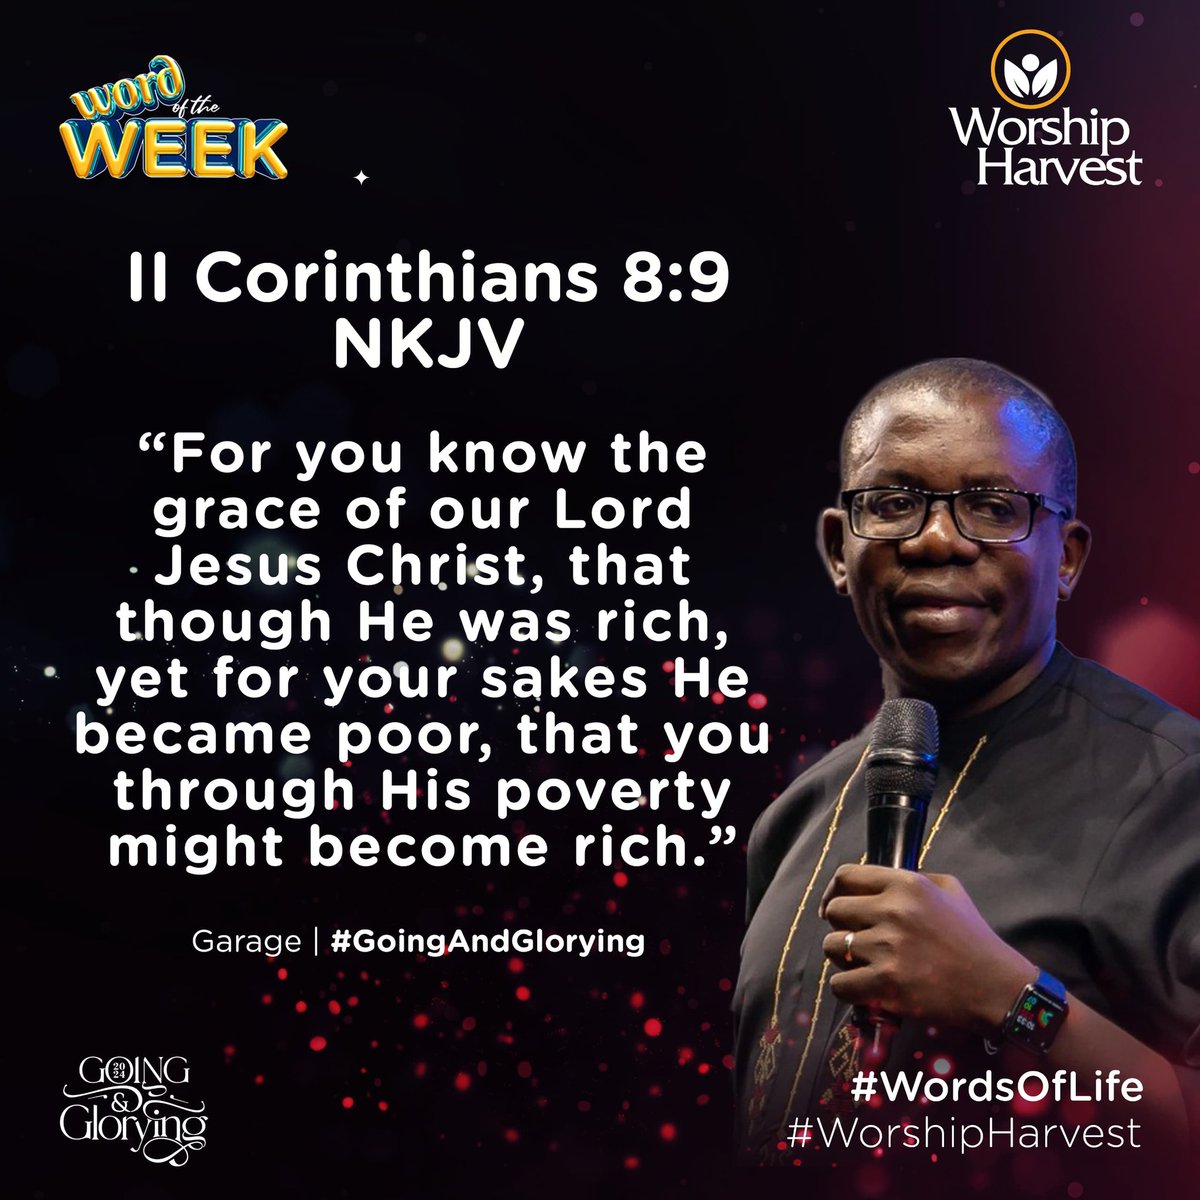 Happy New Week! 😊

#WordOfTheWeek #WordsOfLife #WorshipHarvest #GoingAngGlorying